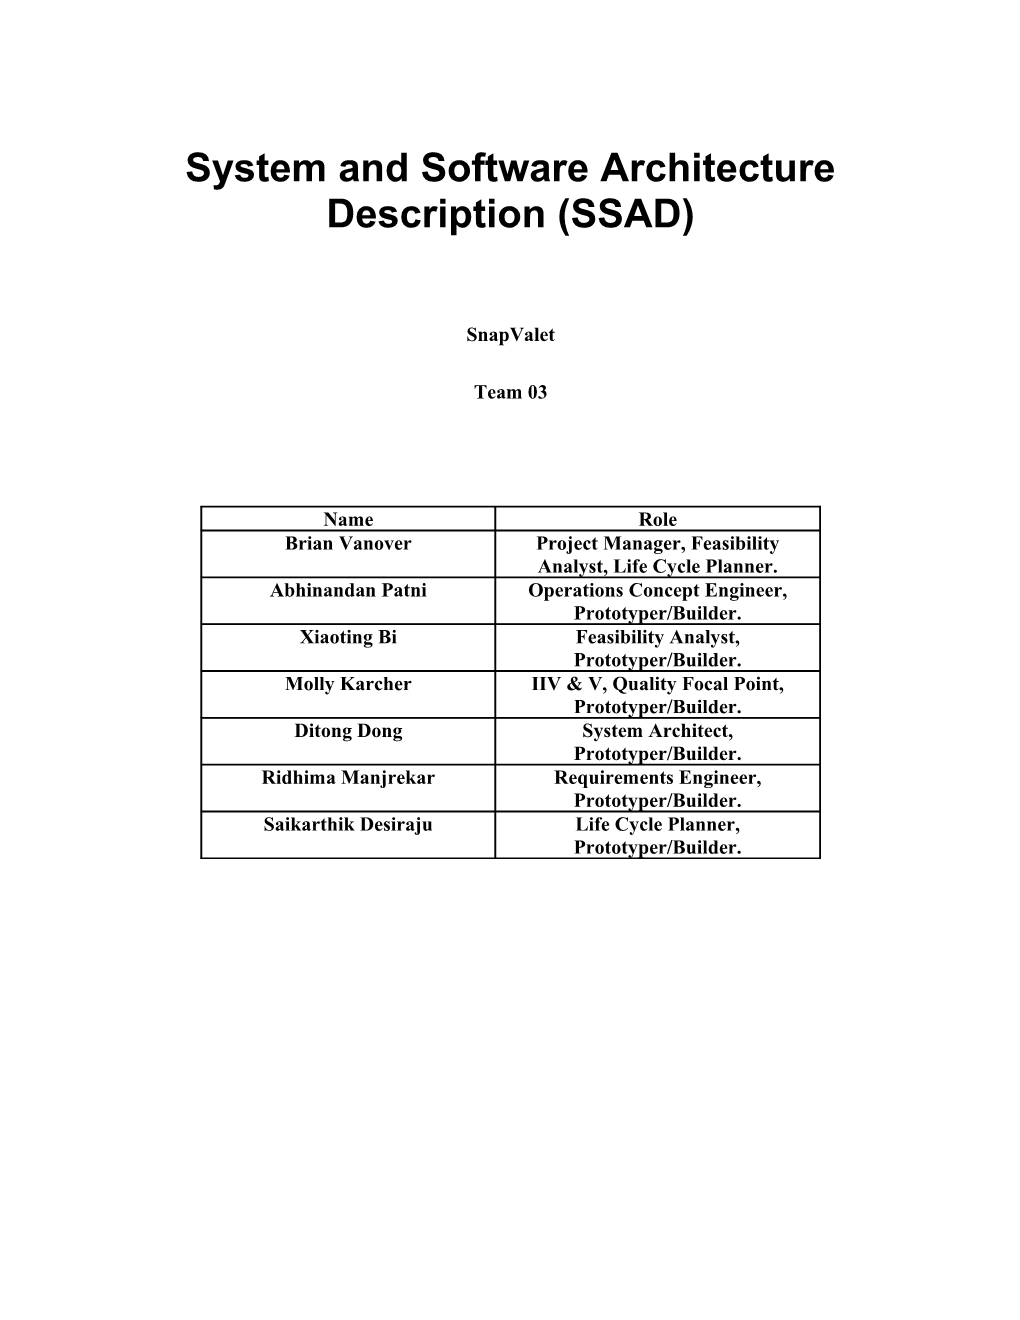 System and Software Architecture Description (SSAD) s1